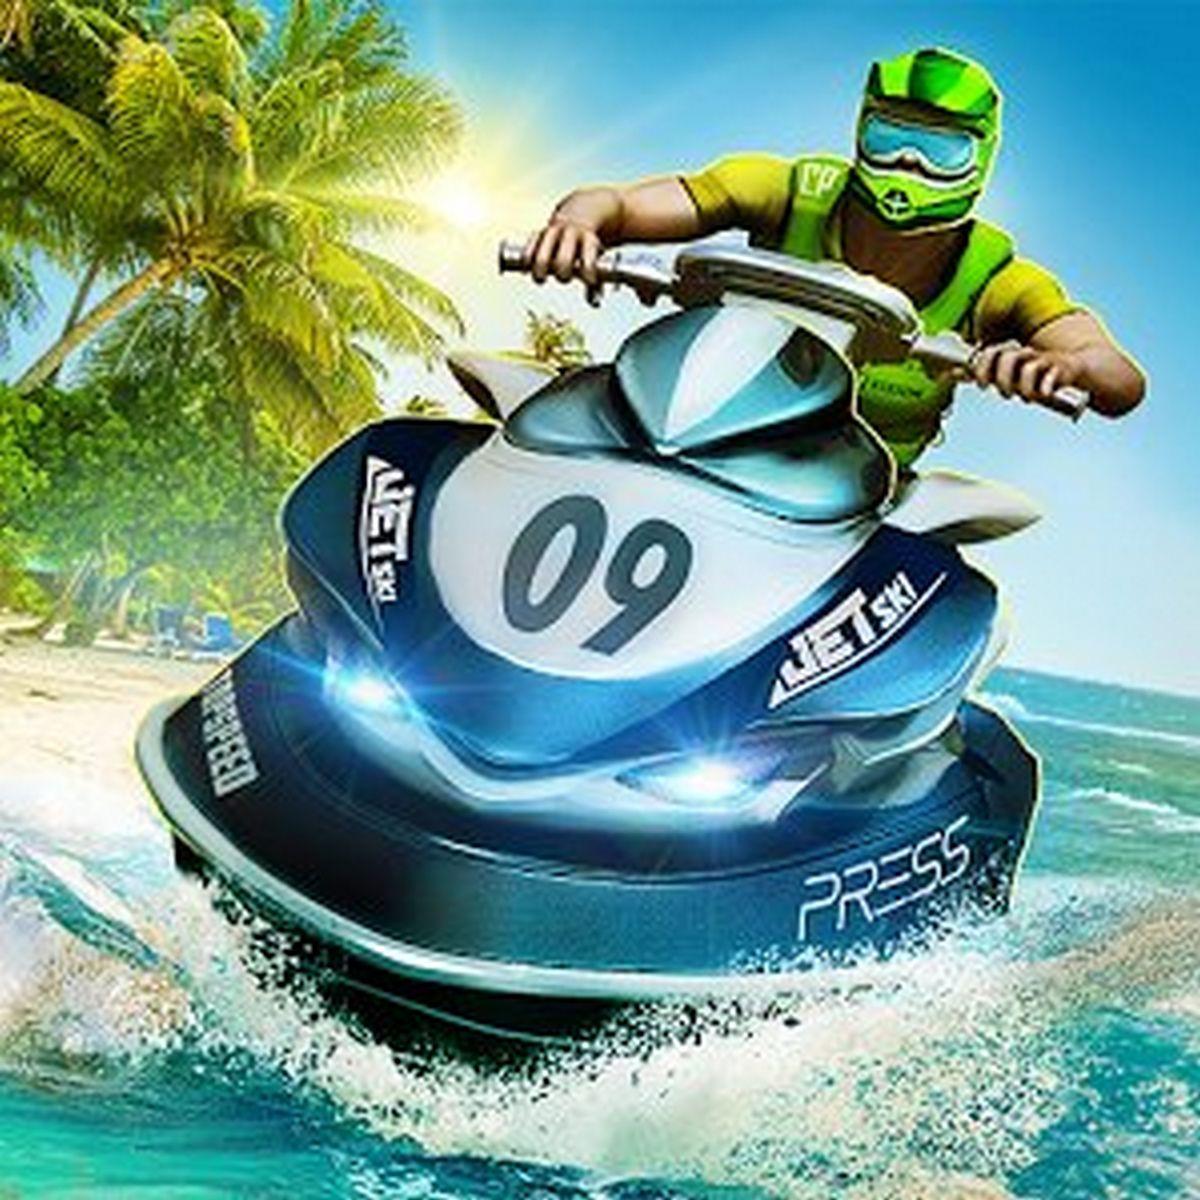 Top Boat Racing Simulator 3D APK MOD v1.06.3 (Premium/Dinero infinito)